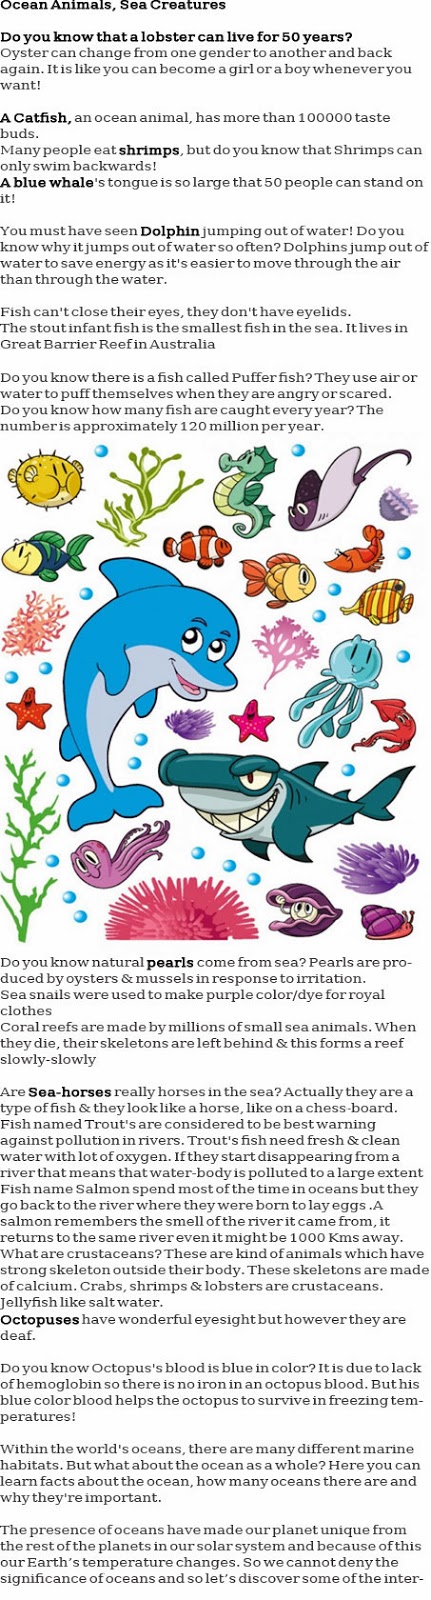 Ocean animals for kids